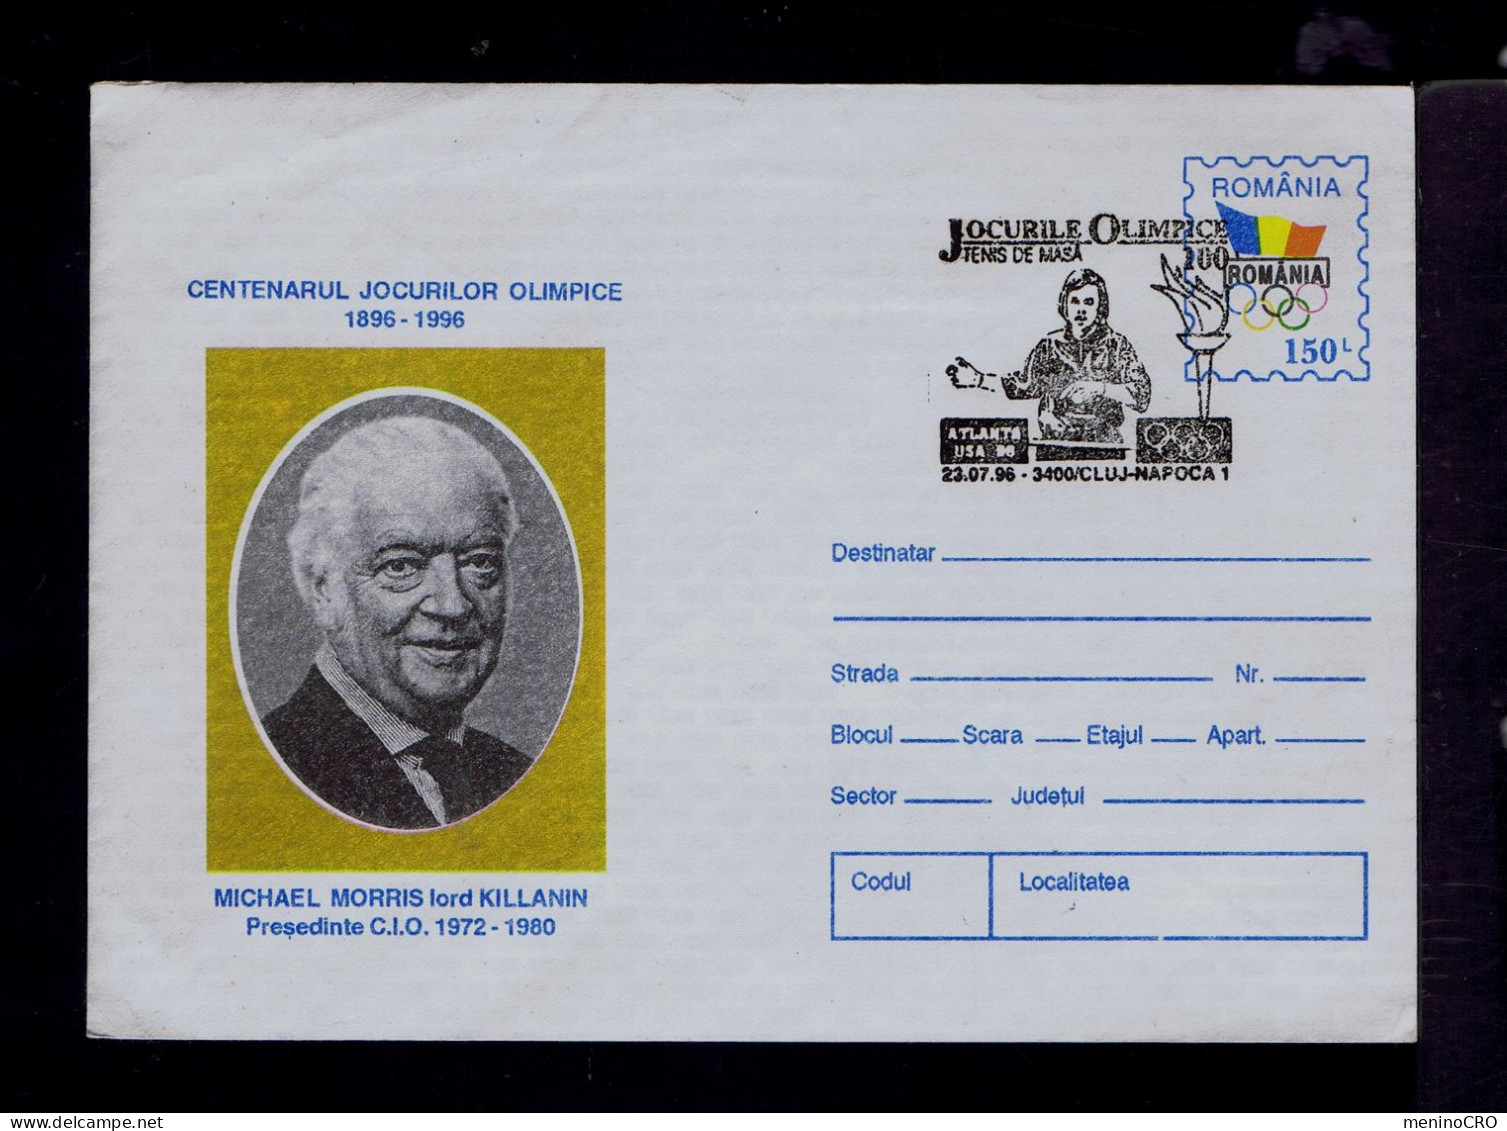 Gc8326 ROMANIA "M. MORRIS Lord KILLANIN" Cover Postal Stationery /1896-1996 JUCURILOR OLIMPIC Pres.1972/80 Atlanta USA - Tenis De Mesa